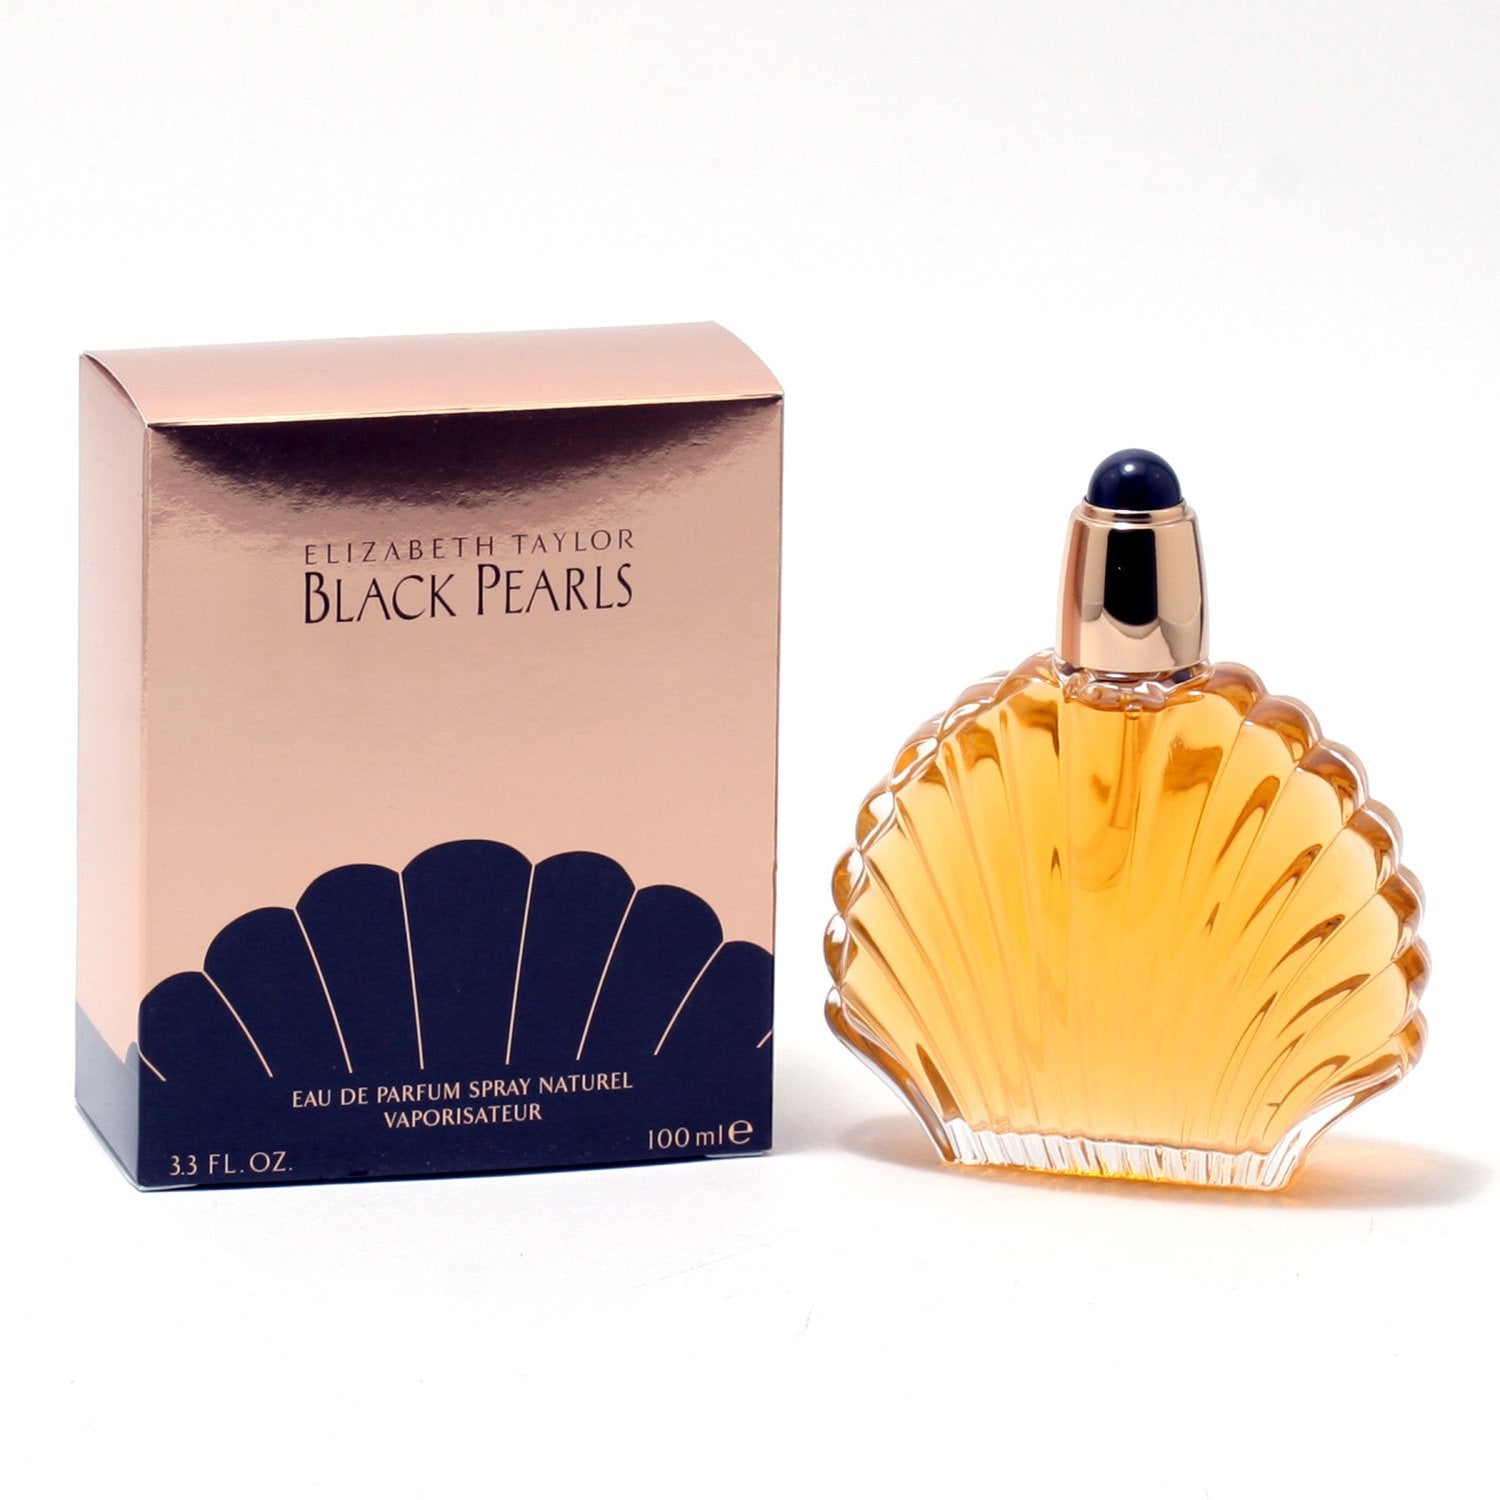 Perfume - BLACK PEARLS FOR WOMEN BY ELIZABETH TAYLOR - EAU DE PARFUM SPRAY, 3.3 OZ